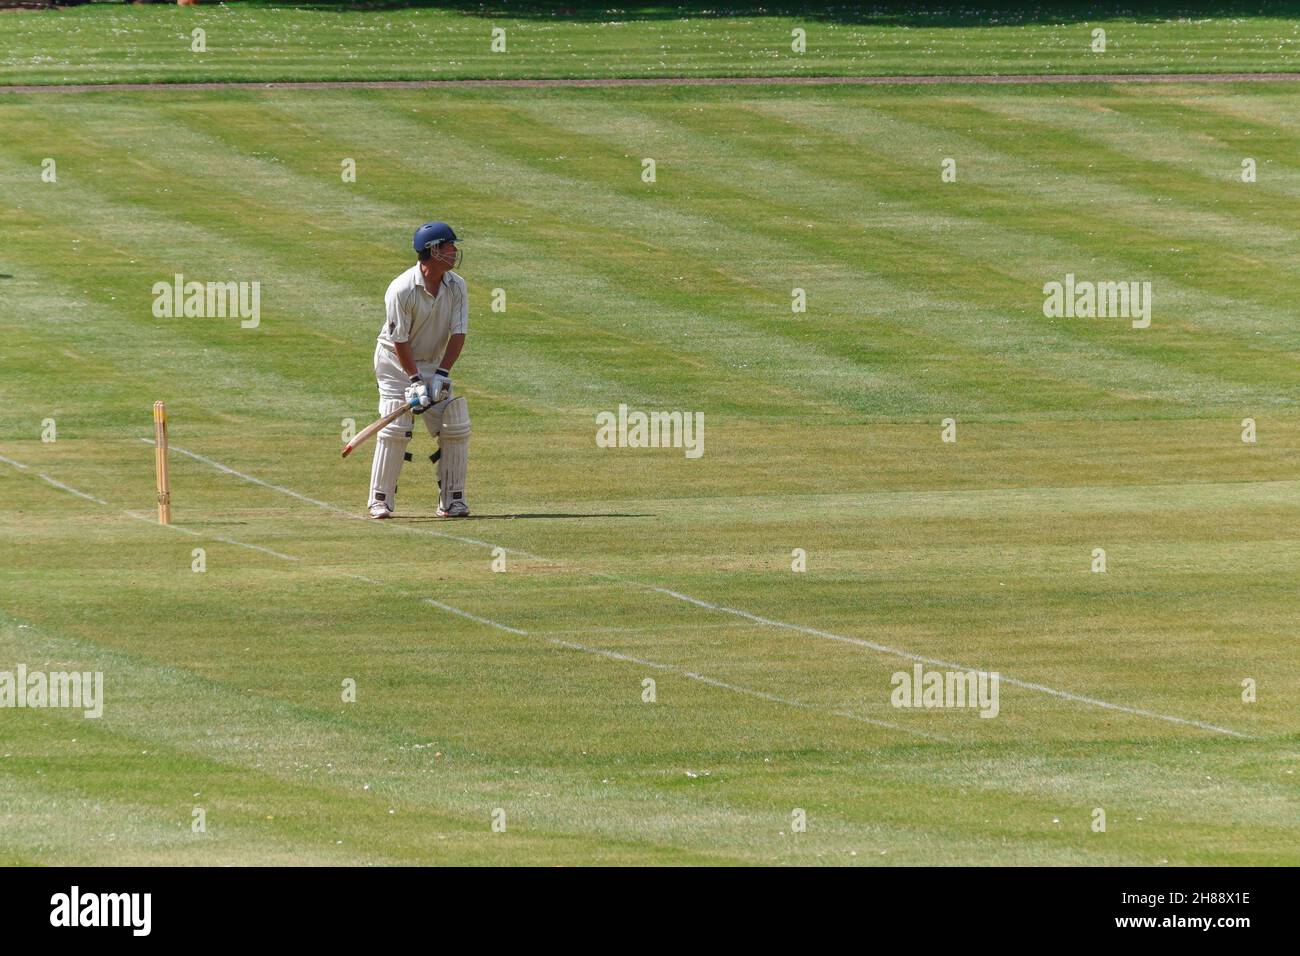 Cricket at the stumps at an English Village Cricket match, Northamptonshire, UK Stock Photo